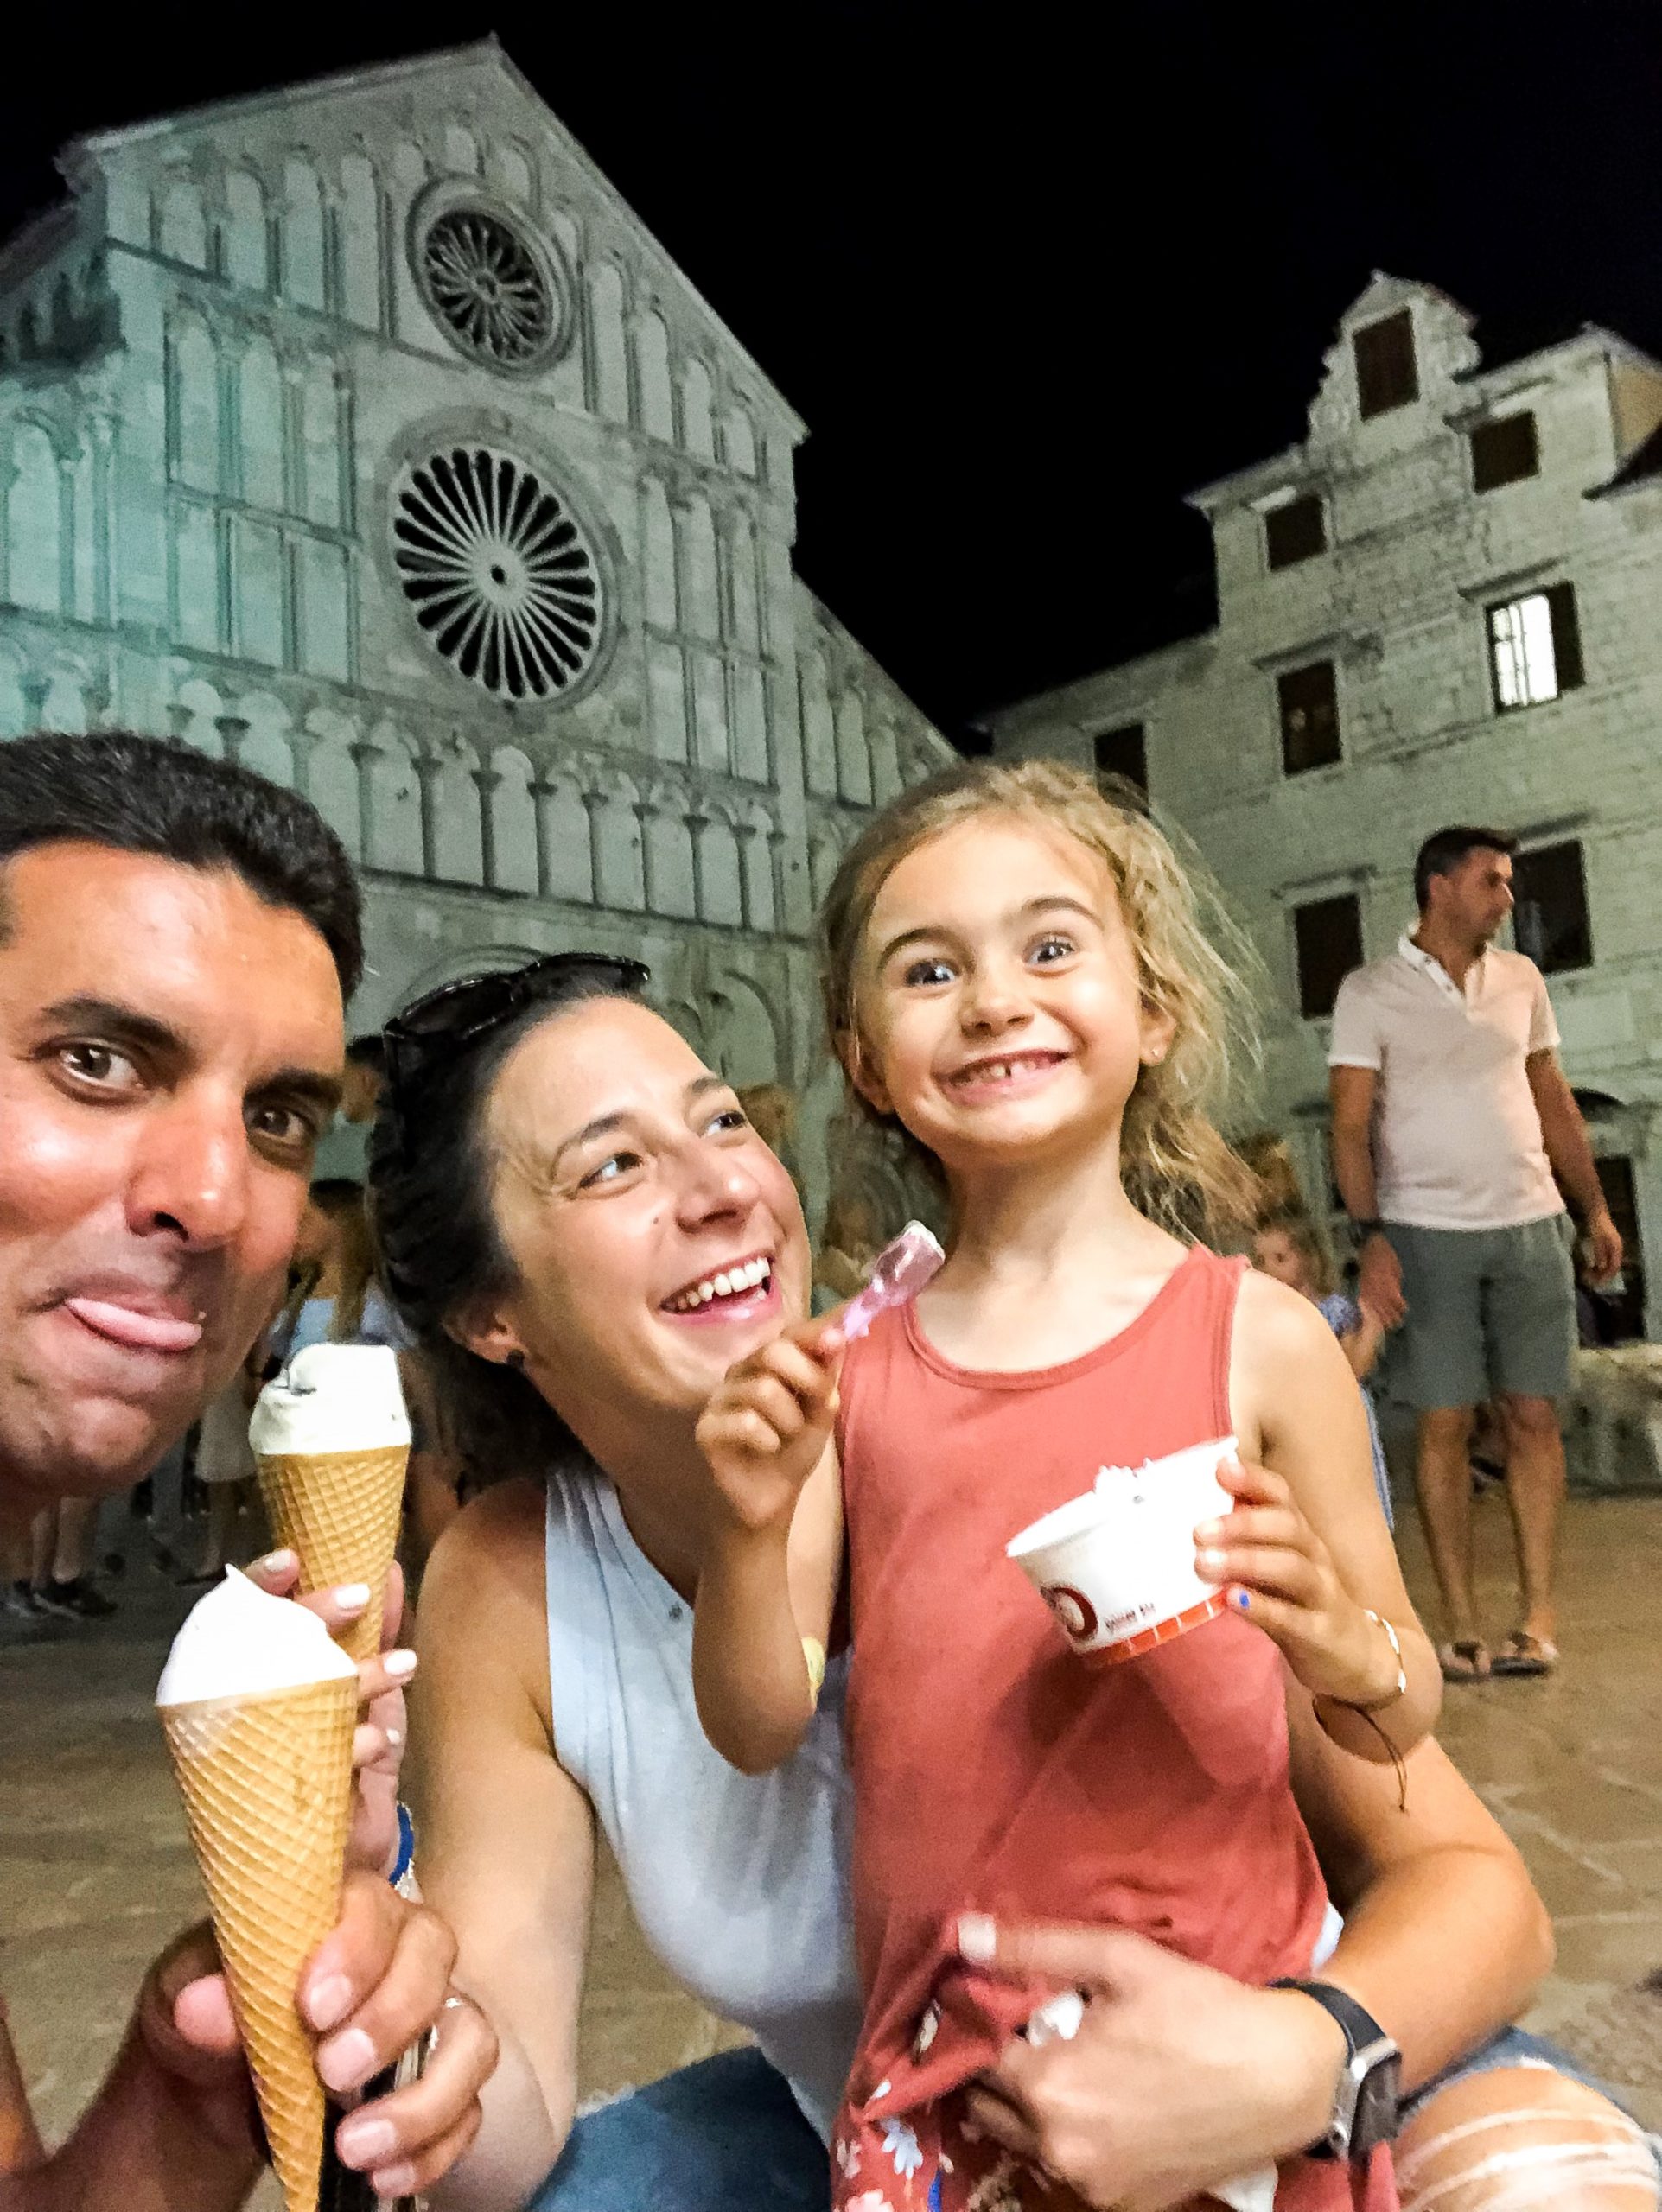 family eating ice cream